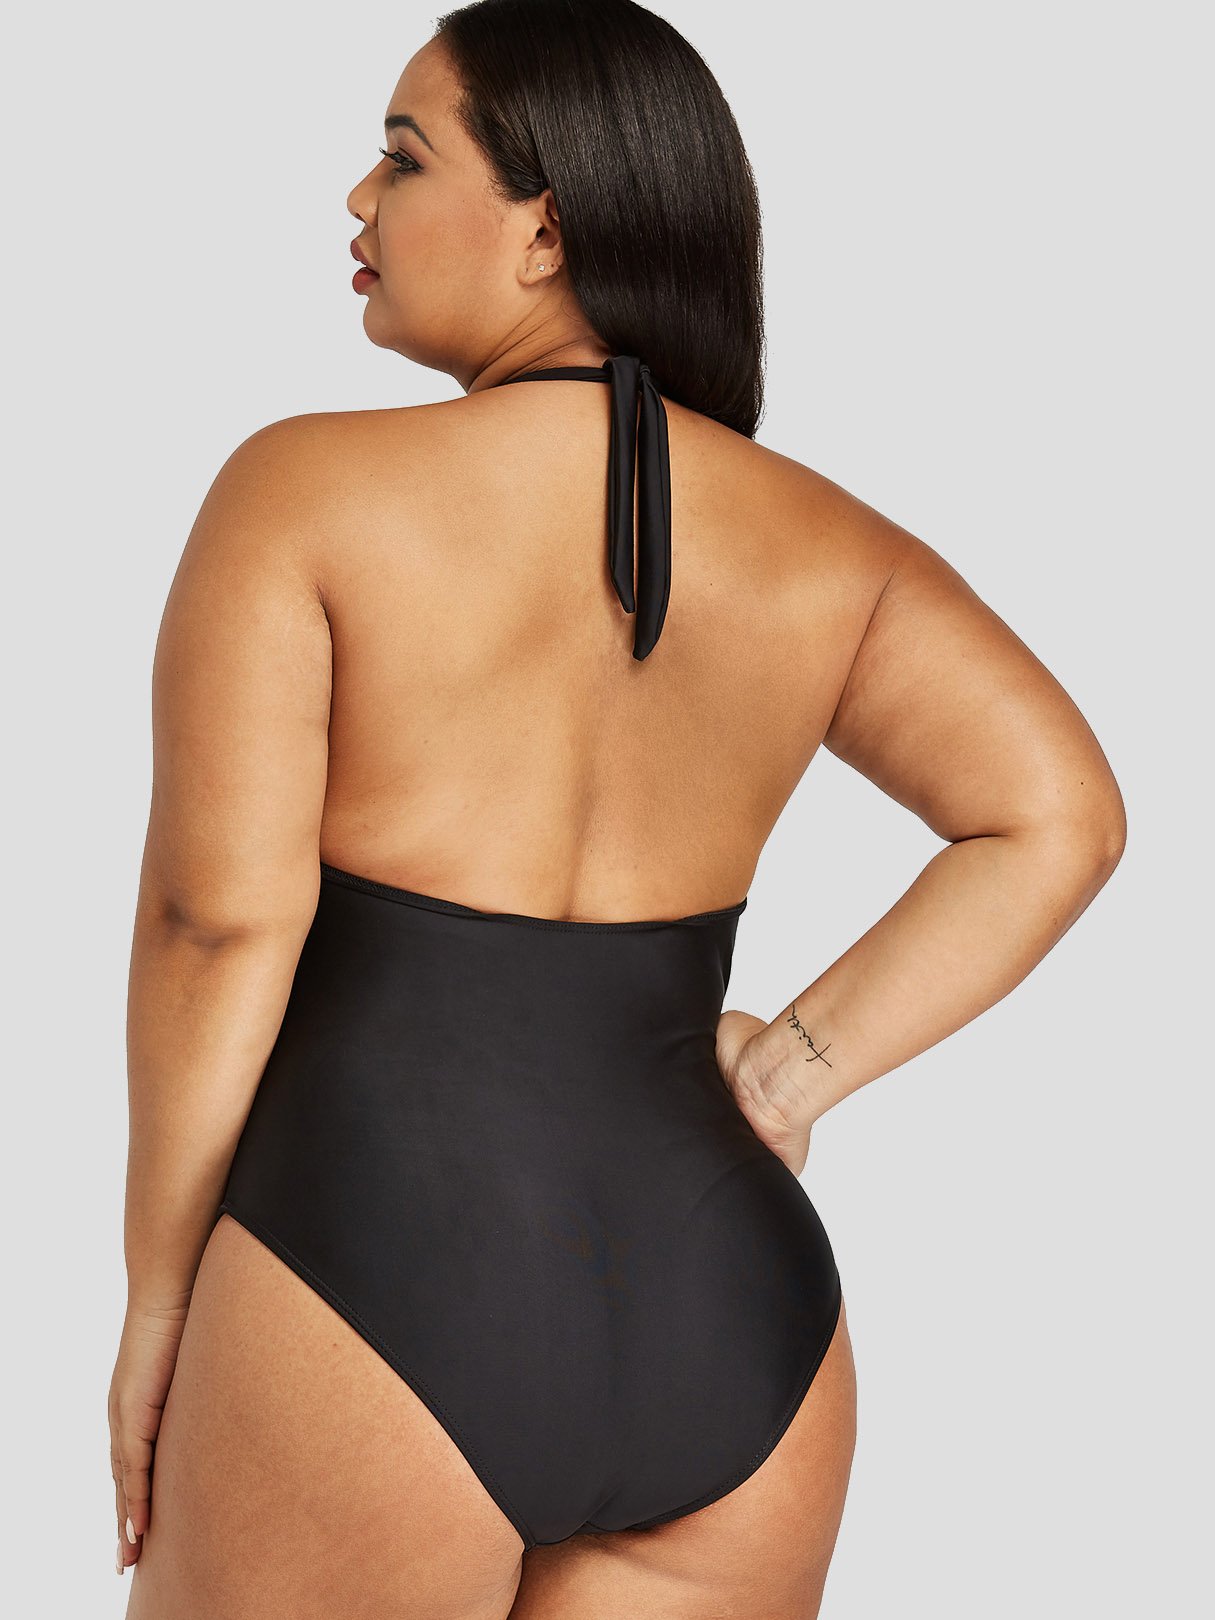 ODM Ladies Sleeveless Plus Size Swimwear